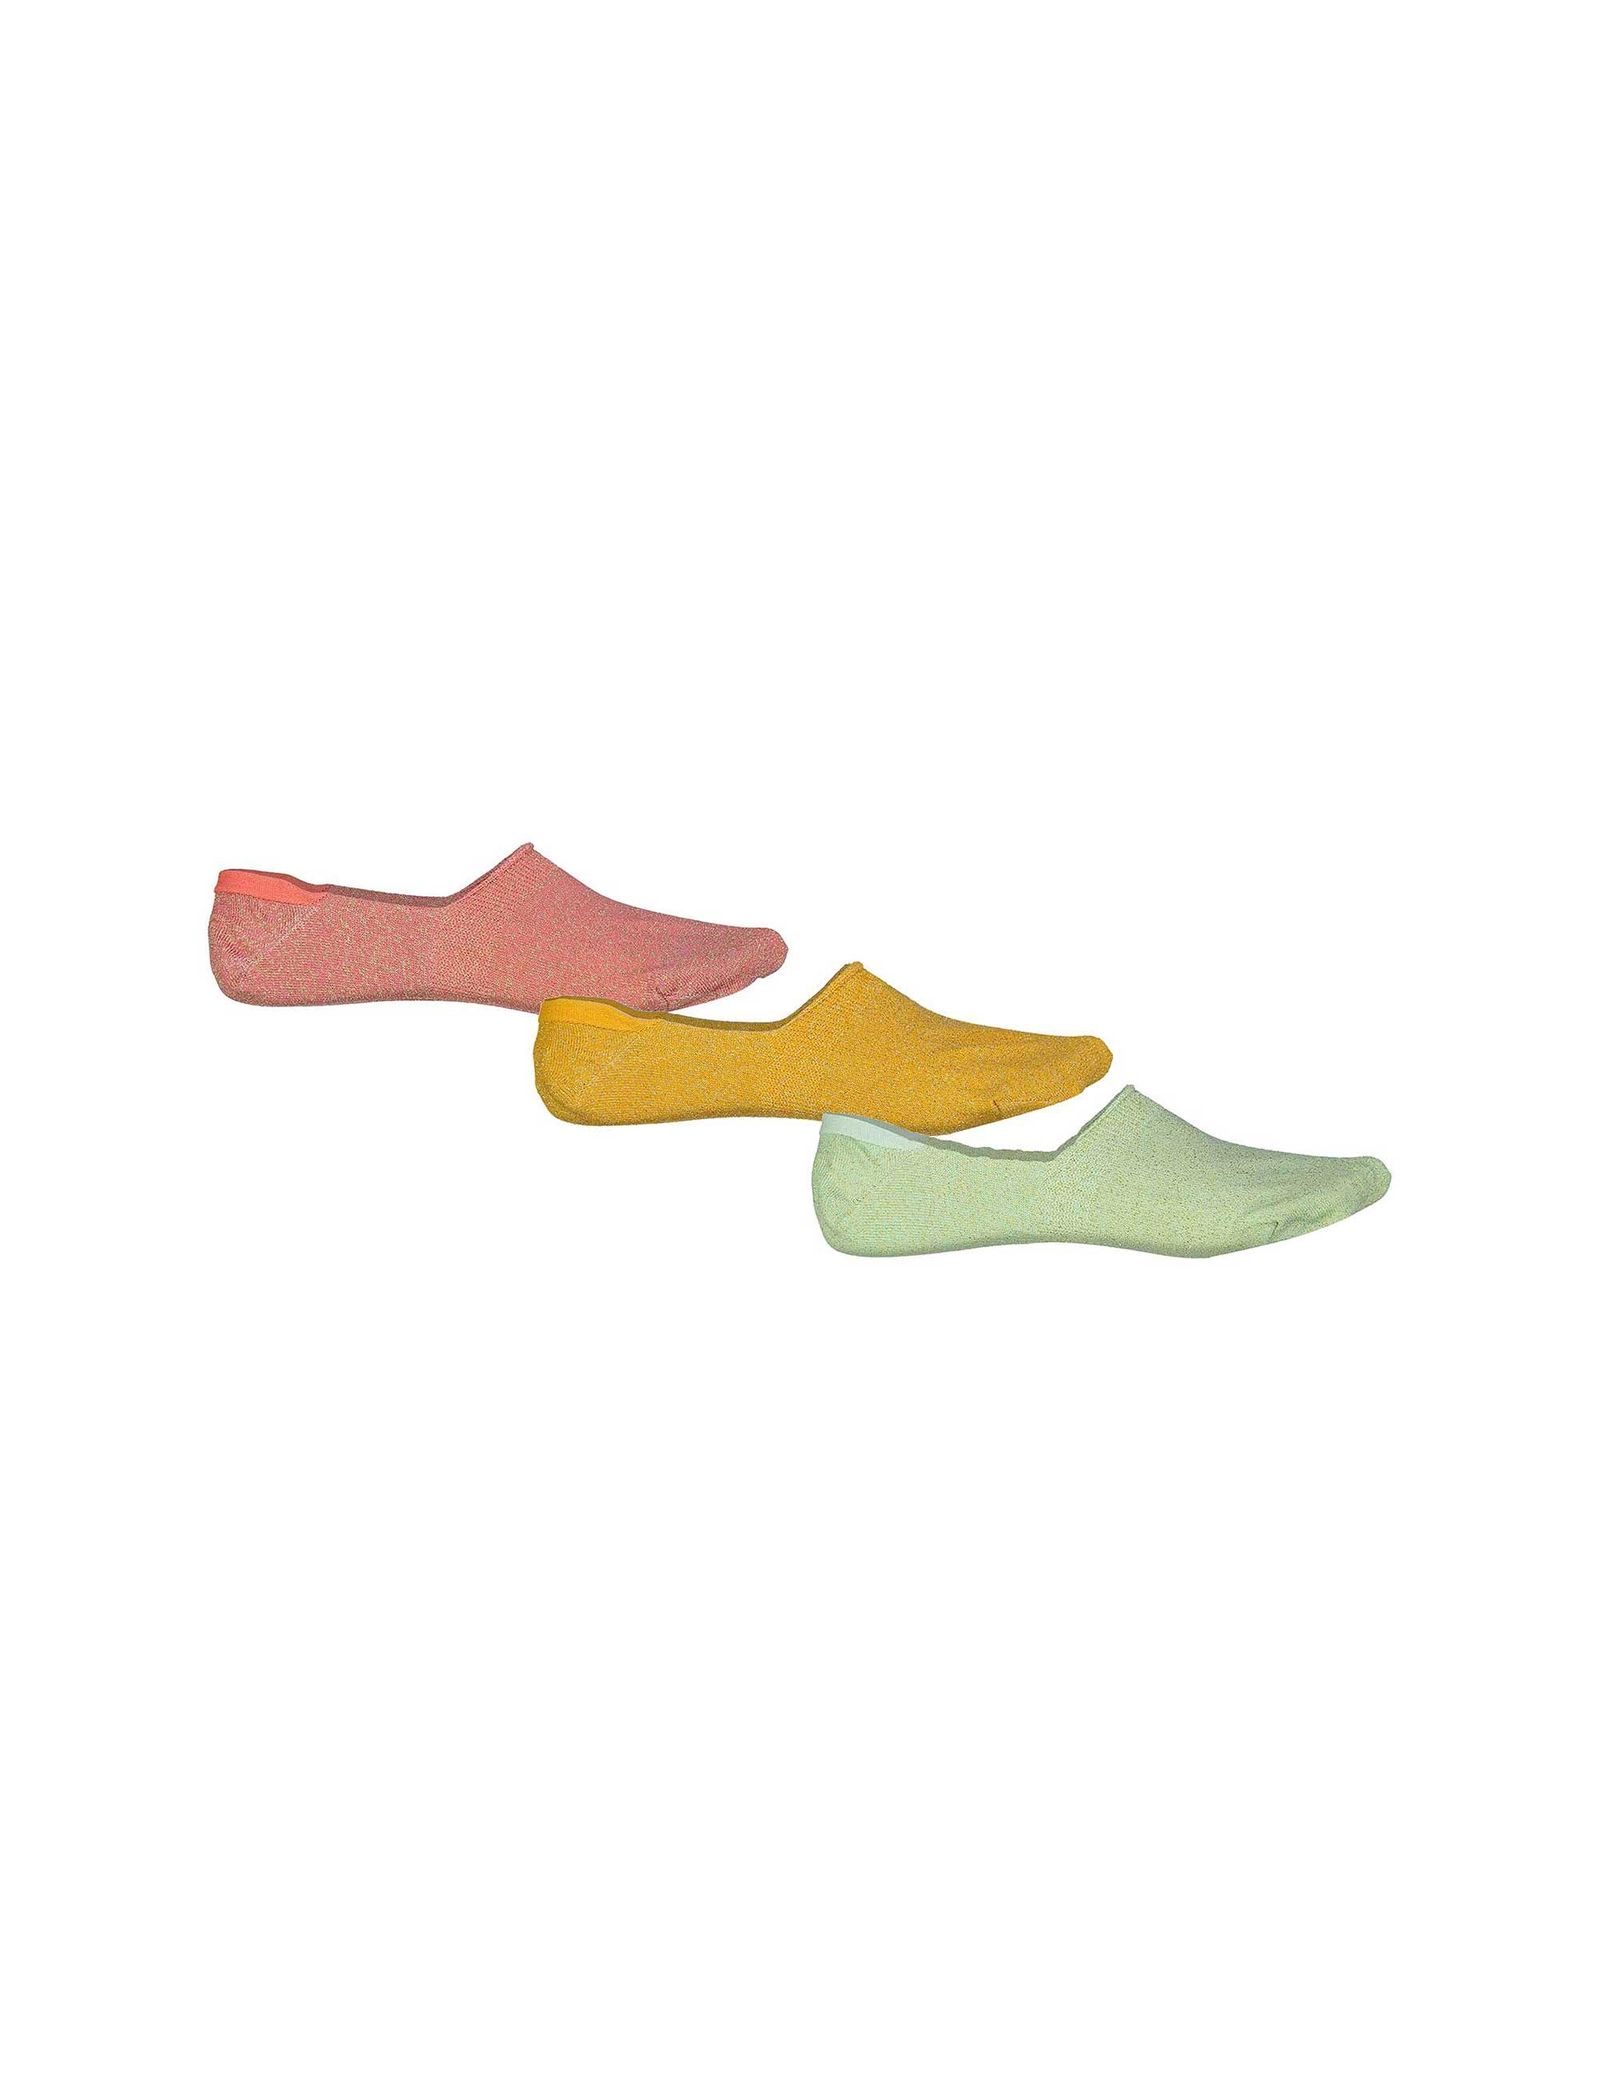 جوراب بدون ساق زنانه بسته 3 عددی - مانگو - زرد/نارنجی/سبز - 2